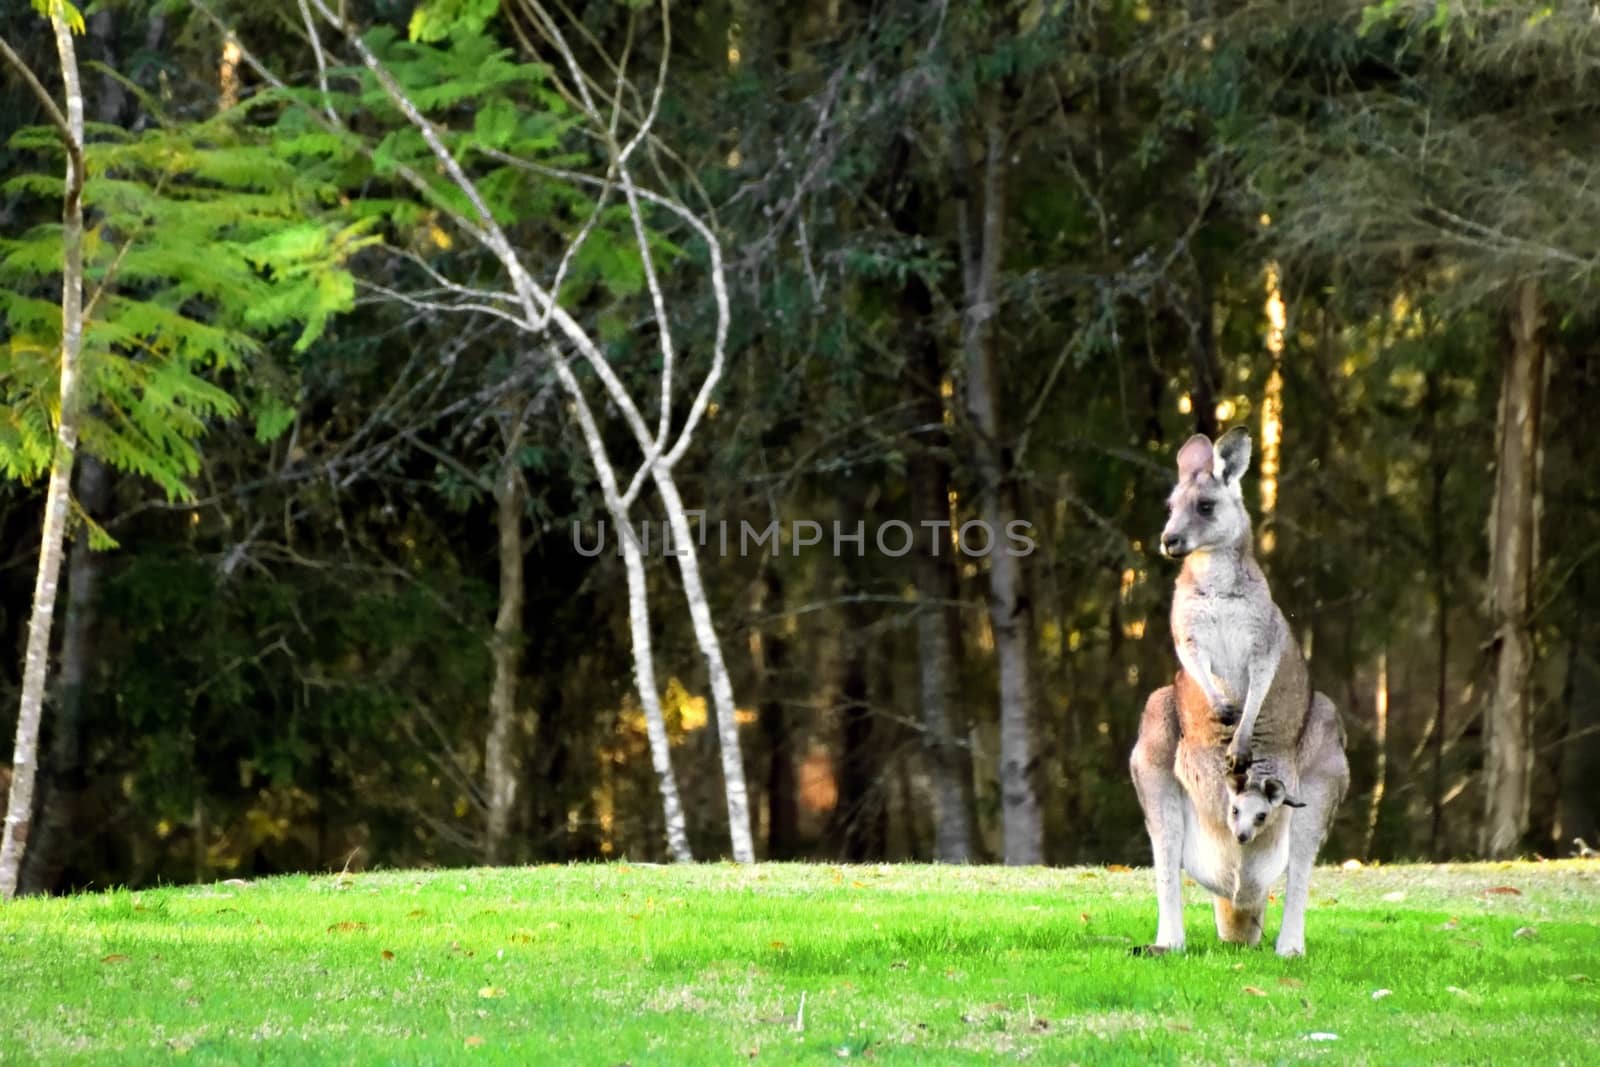 A Kangaroo with her Joey on grass